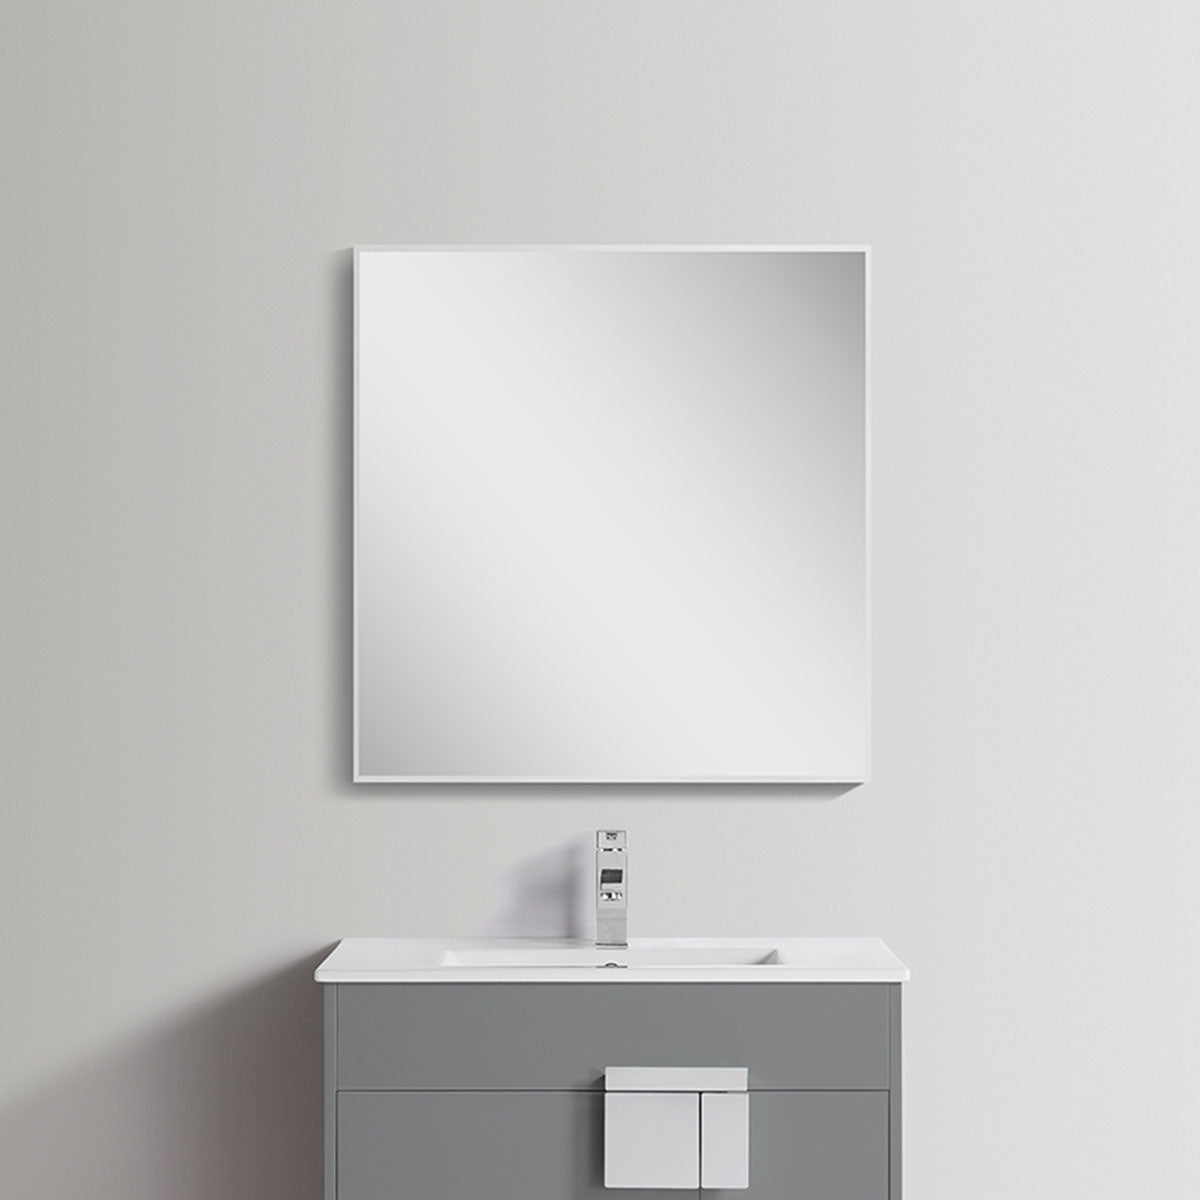 30" x 32" Aluminum Rectangle Bathroom Wall Mirror (Silver)